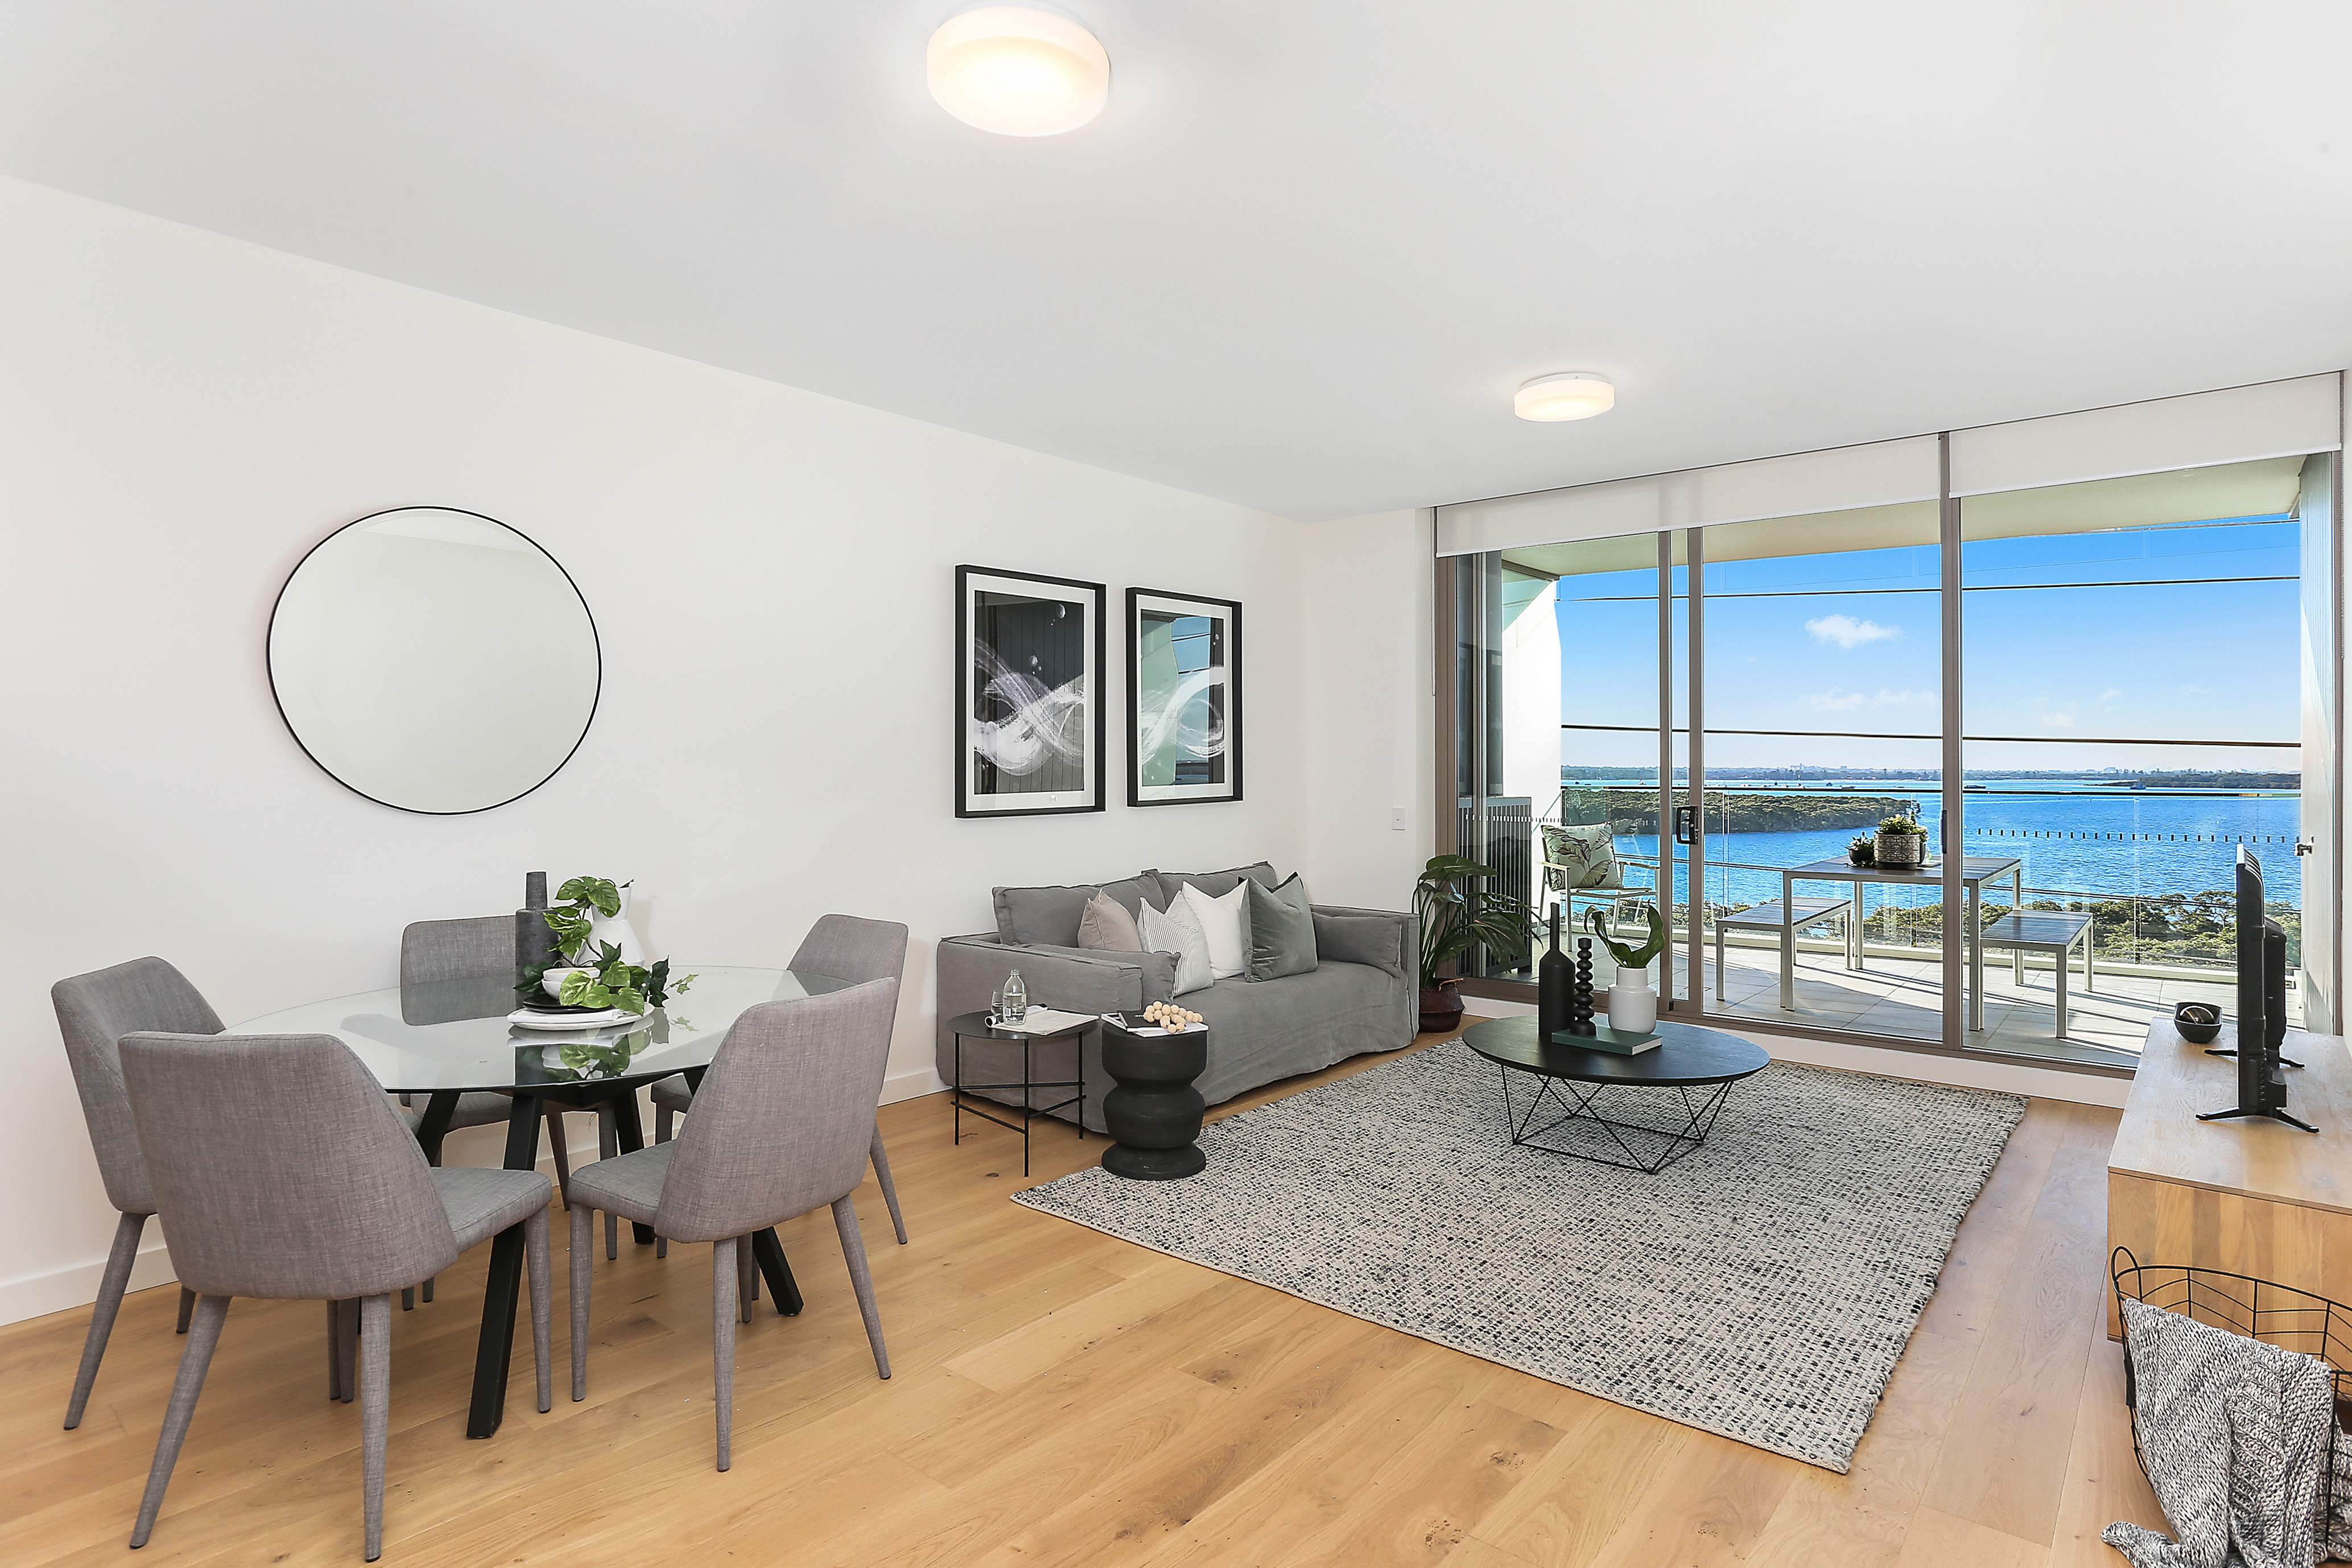 Home Dressing A Luxury Sea View Apartment - Bowerbird Interiors